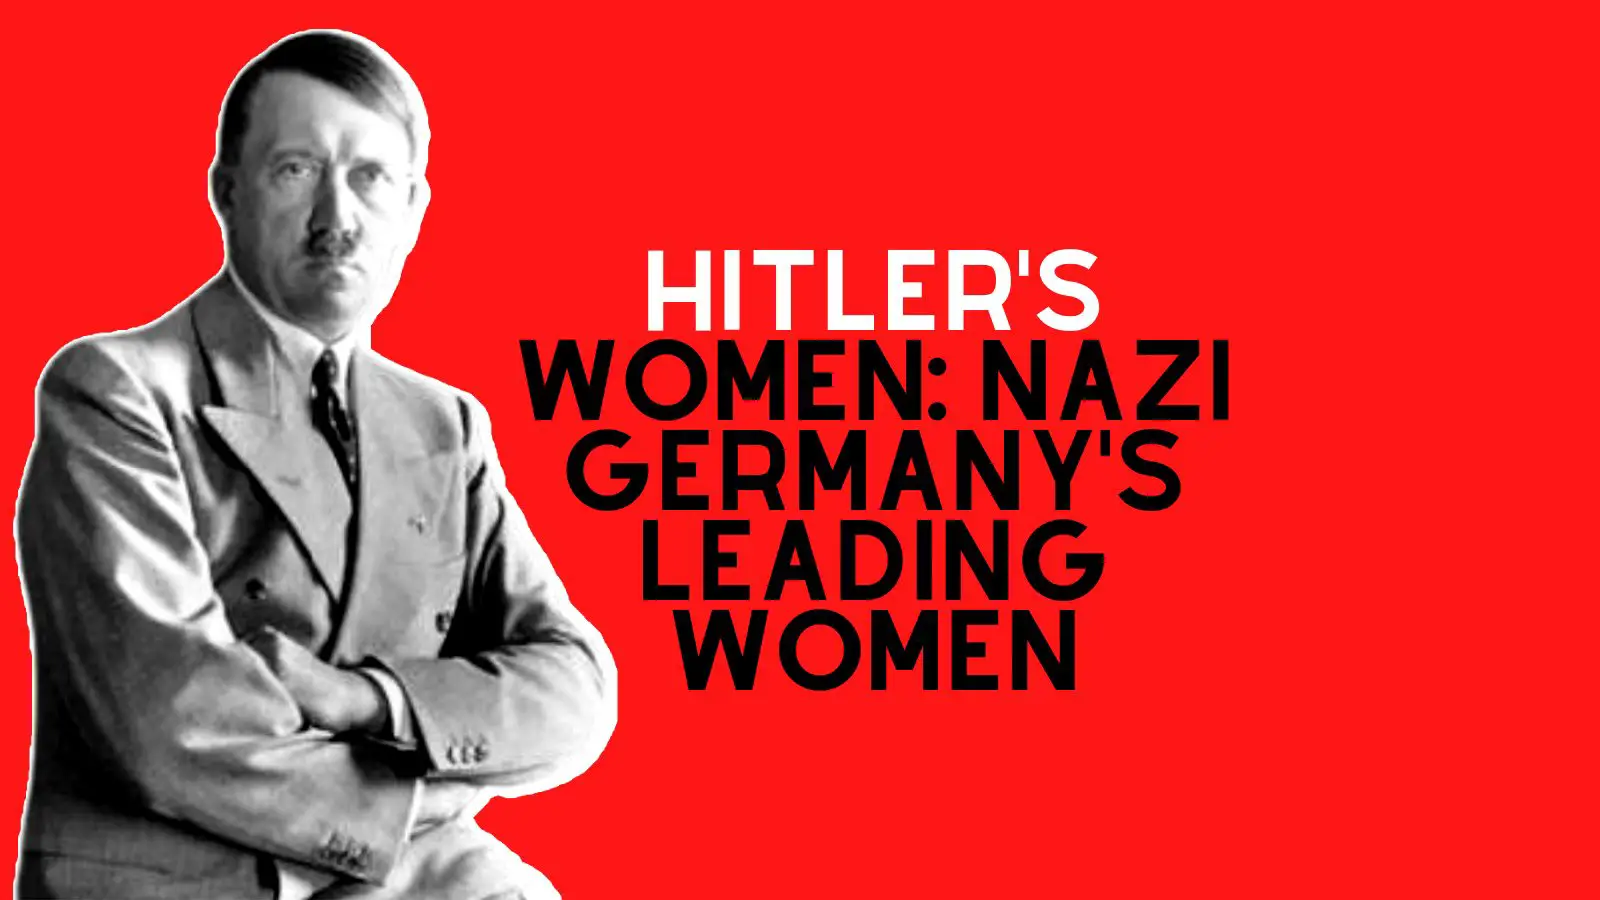 Nazi Germany's leading women